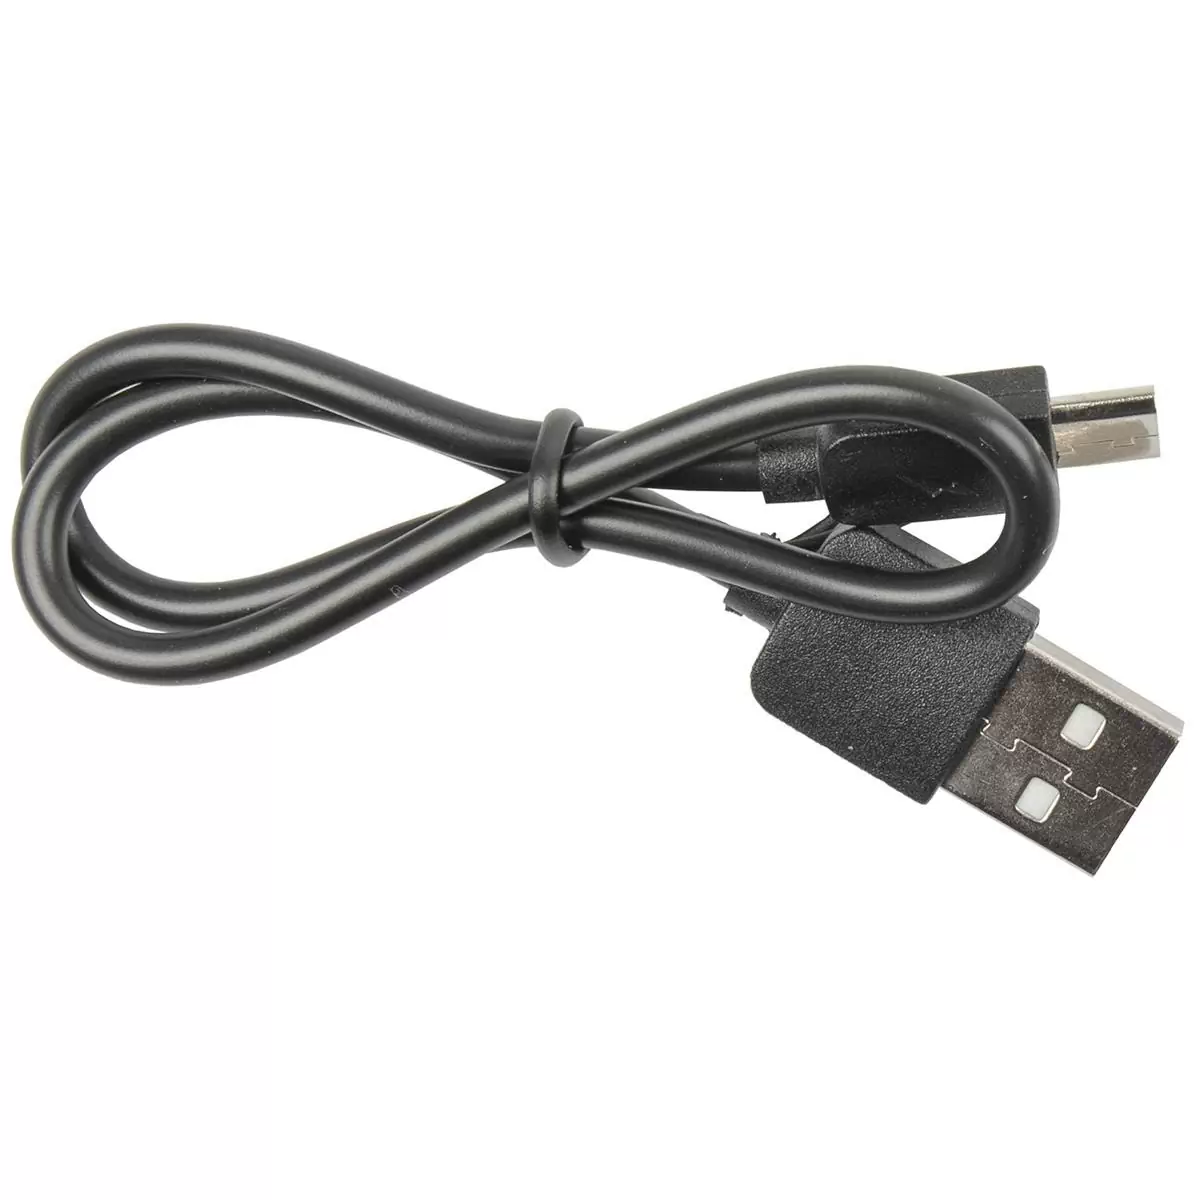 Pompa elettrica a Batteria Elumatik USB2 #4